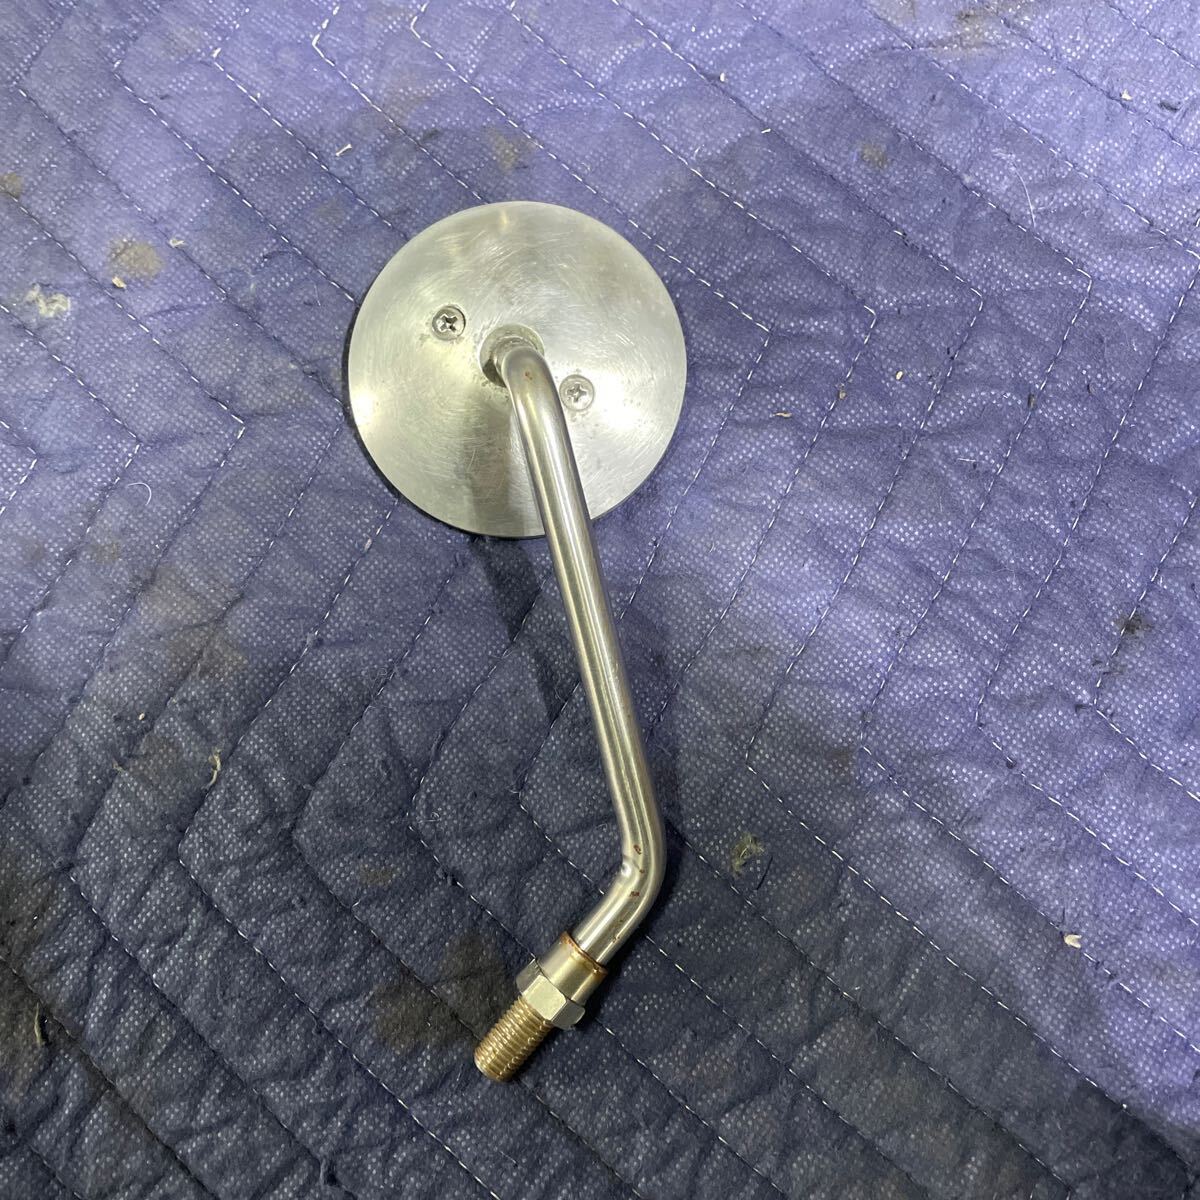 [157] after market mirror aluminium / stainless steel 10. regular screw right for poshposhu